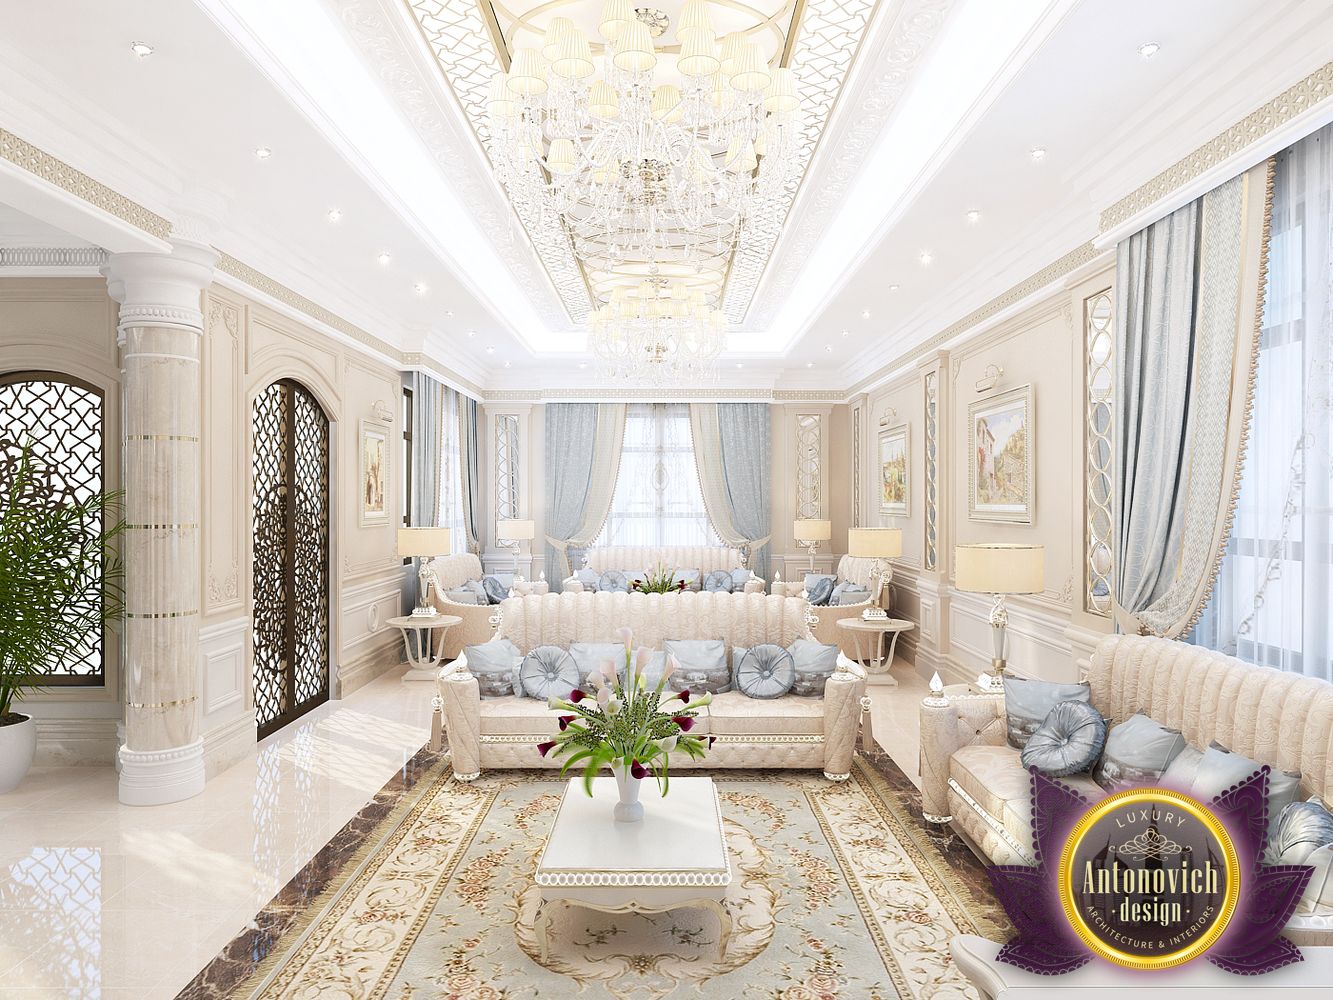 LUXURY ANTONOVICH DESIGN UAE: Modern living room ideas by Katrina ...